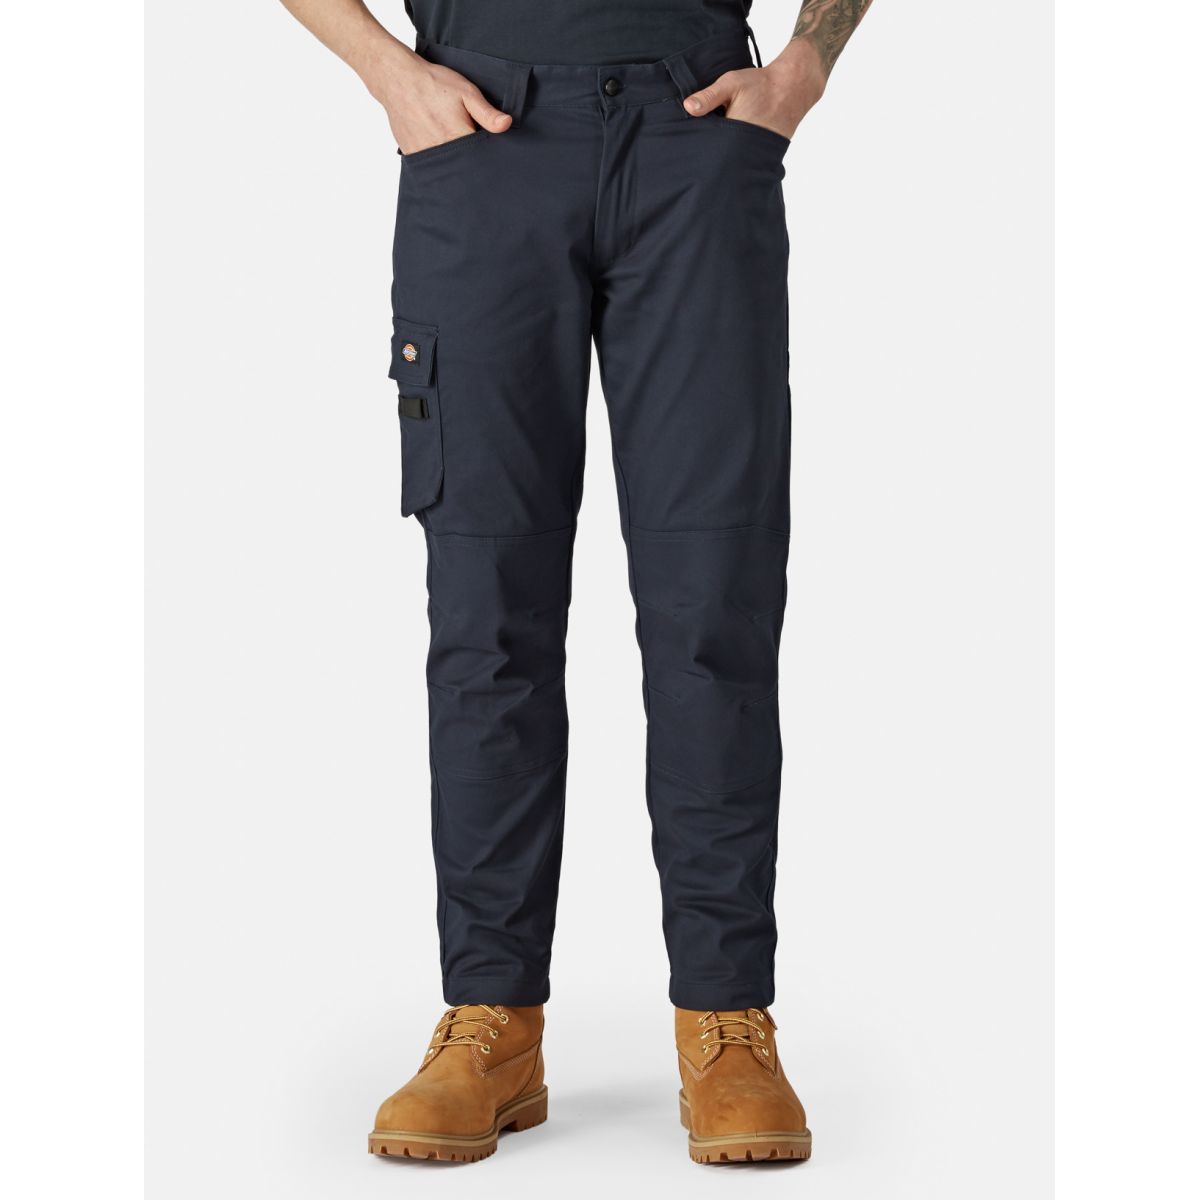 Pantalon Lead In Flex Bleu marine - Dickies - Taille 50 1